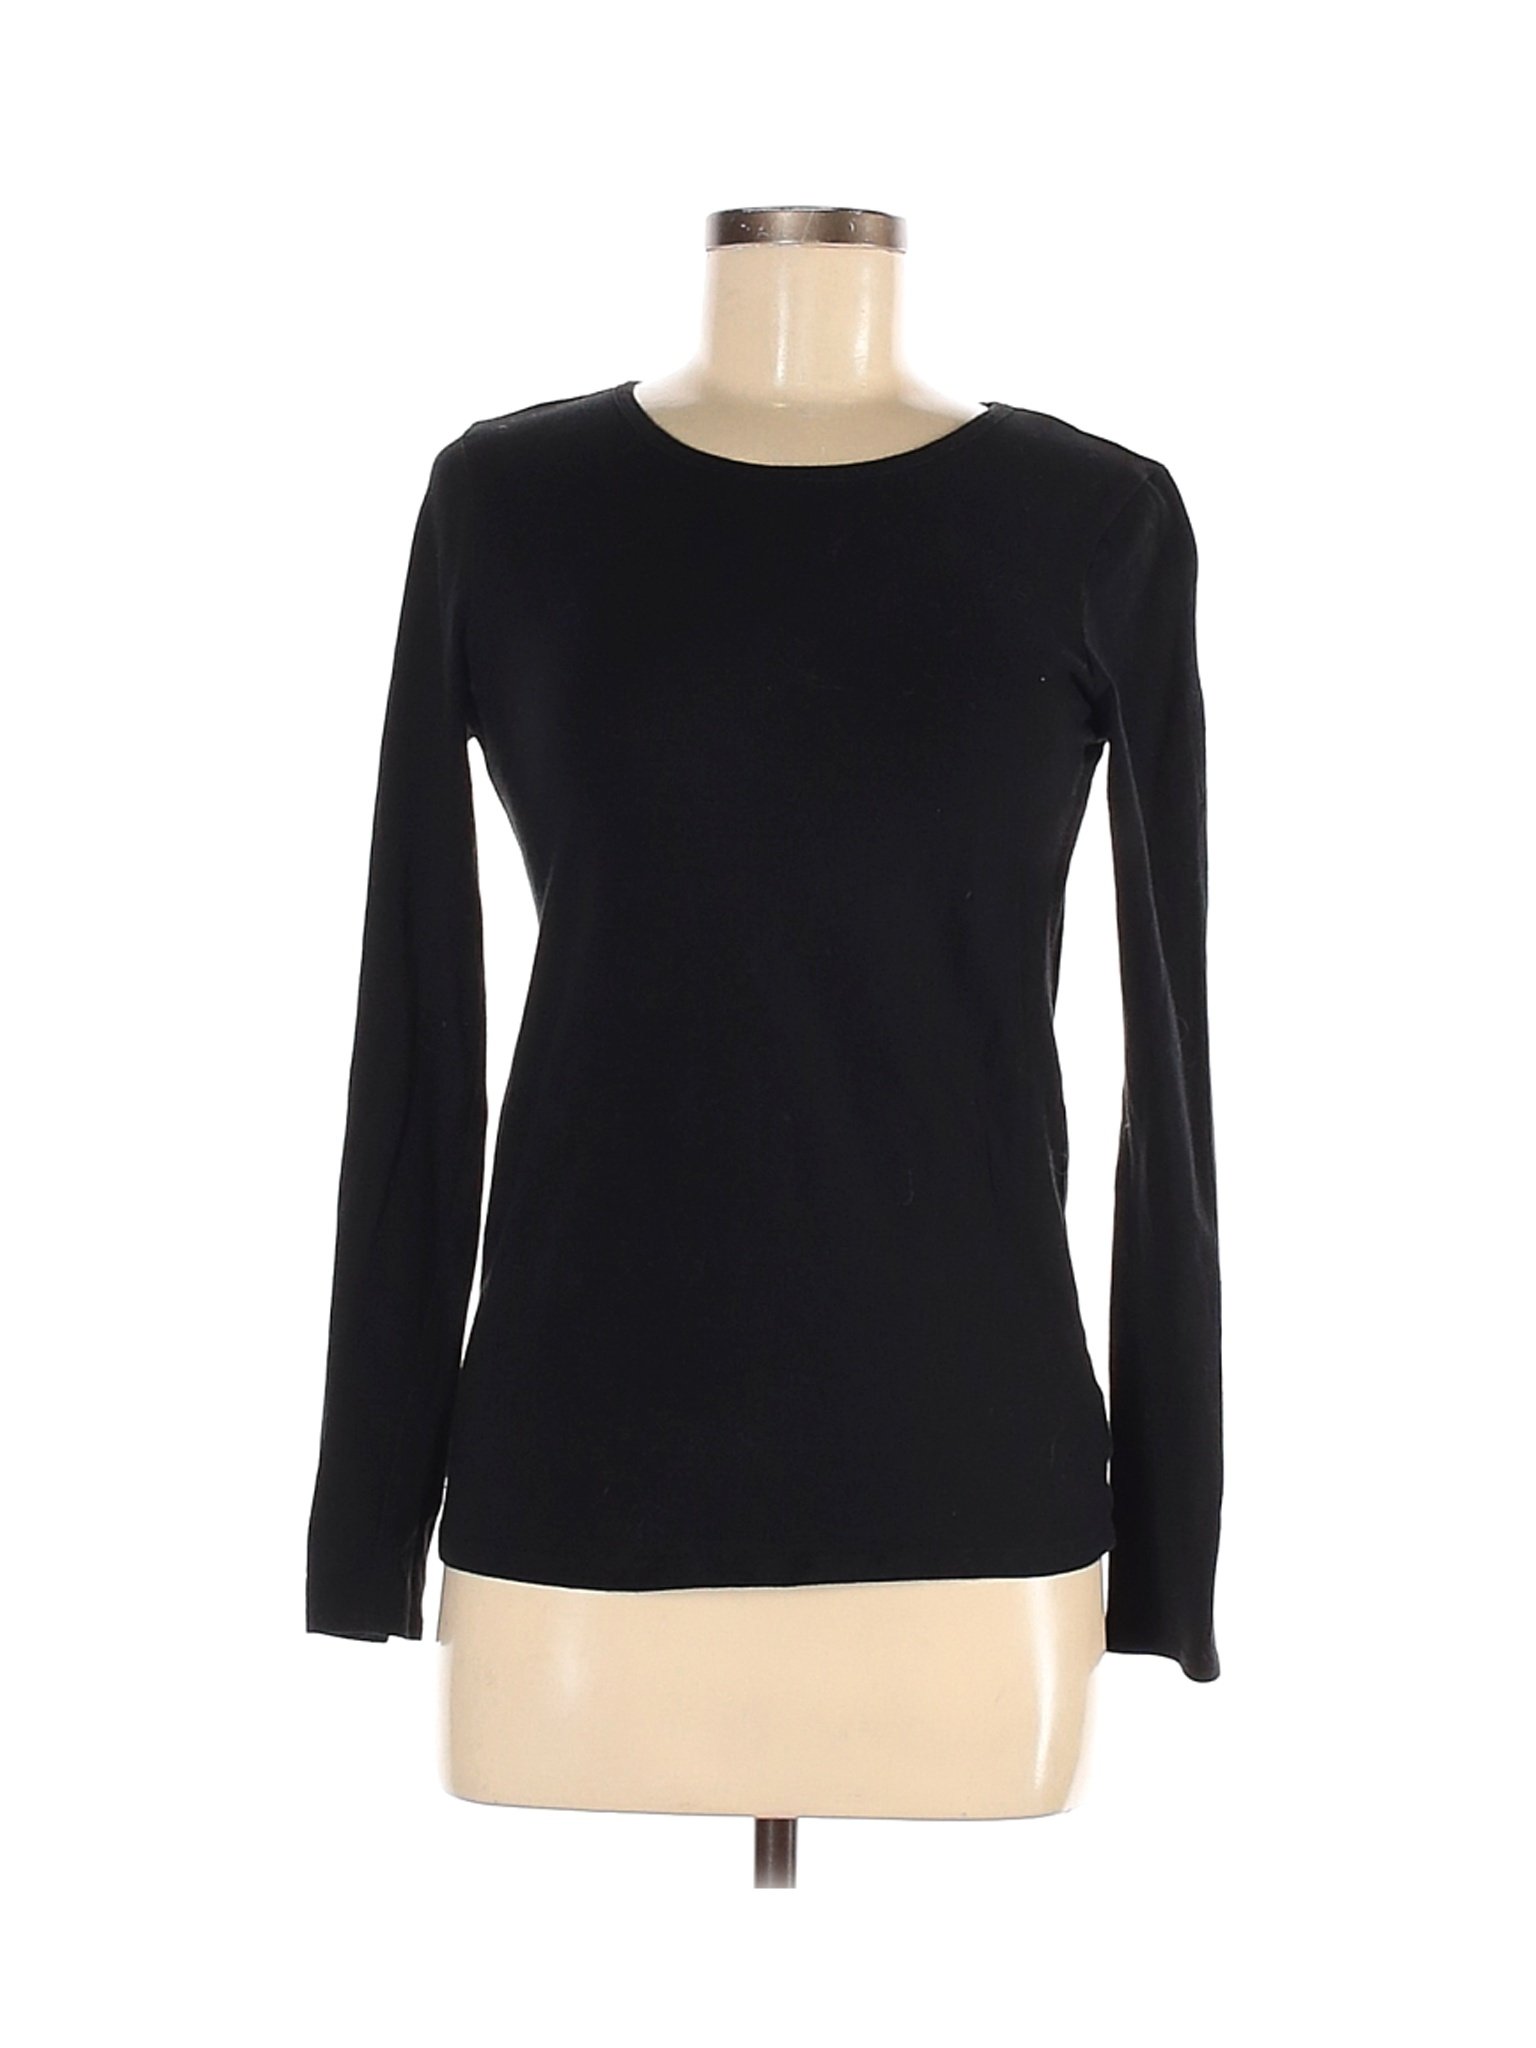 Calvin Klein Women Black Long Sleeve Top M | eBay